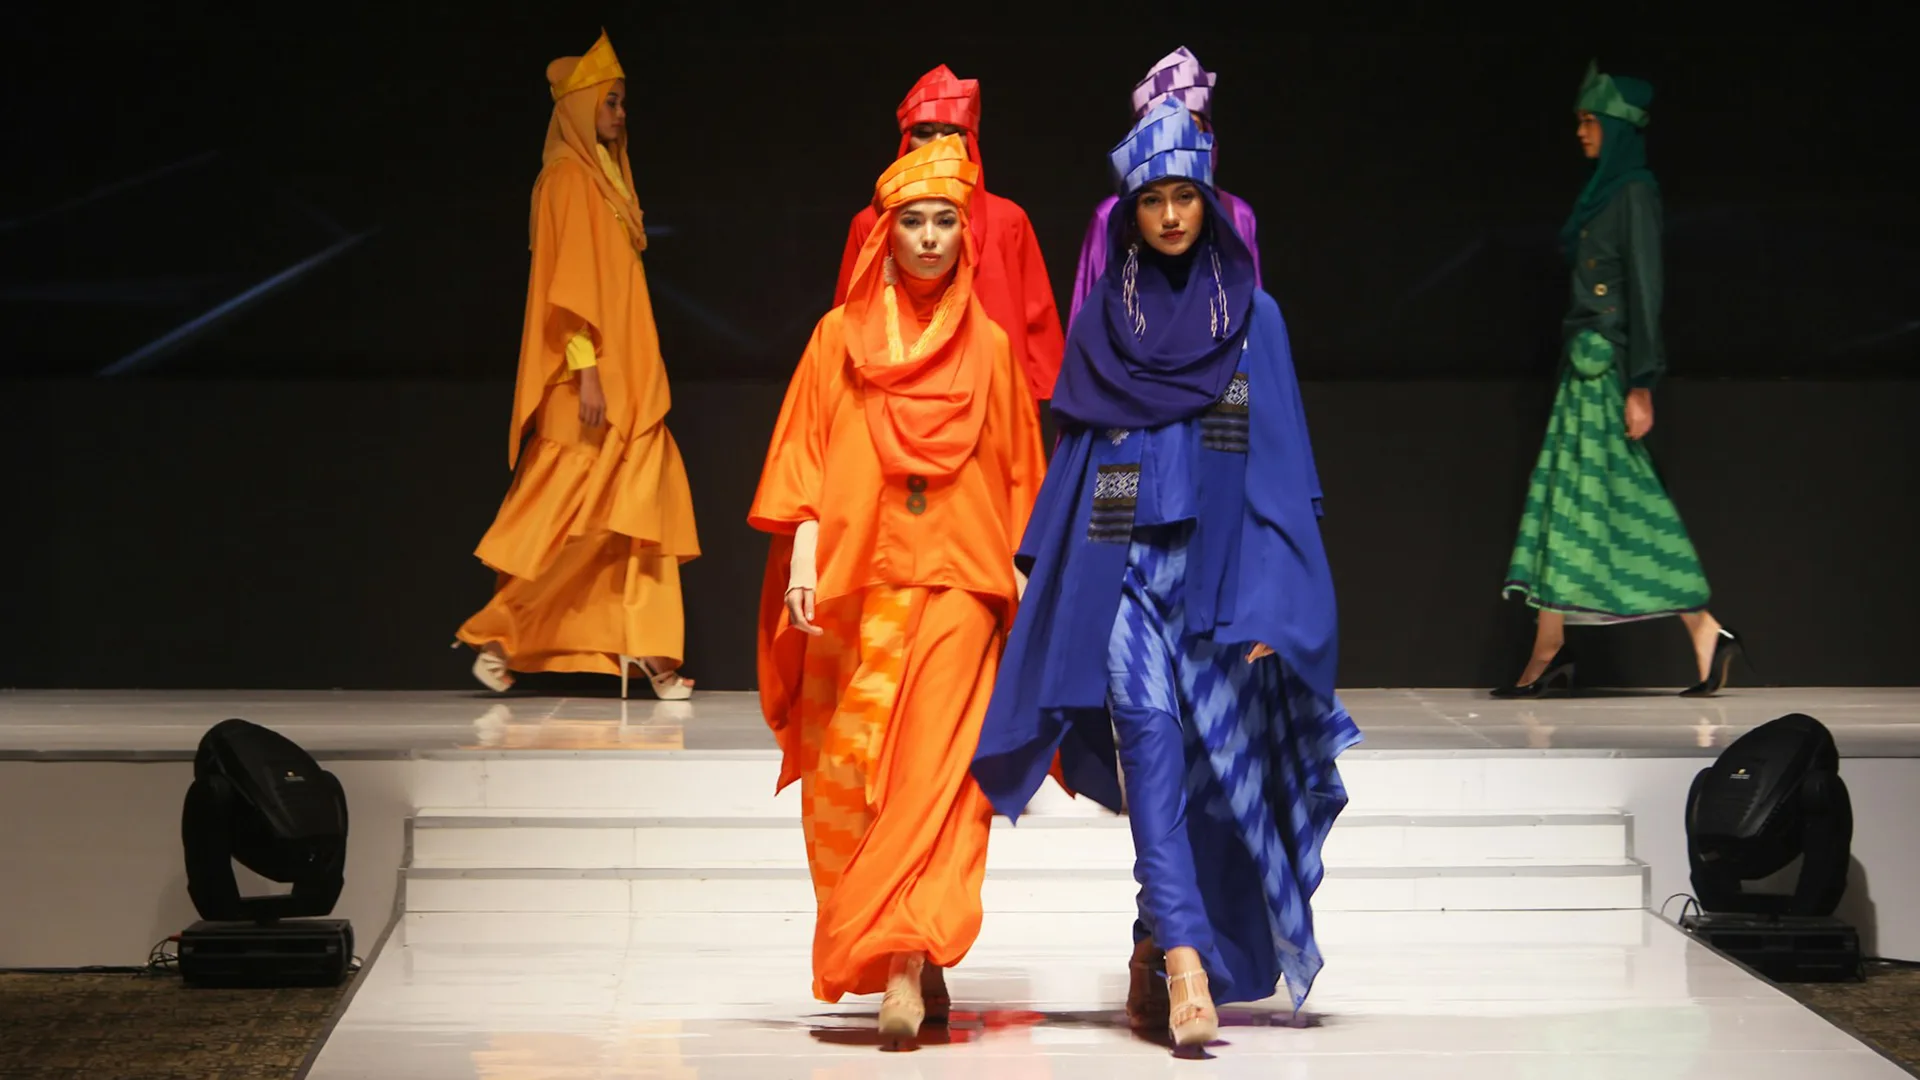 Women walking down a catwalk wearing orange and purple dresses and headscarves